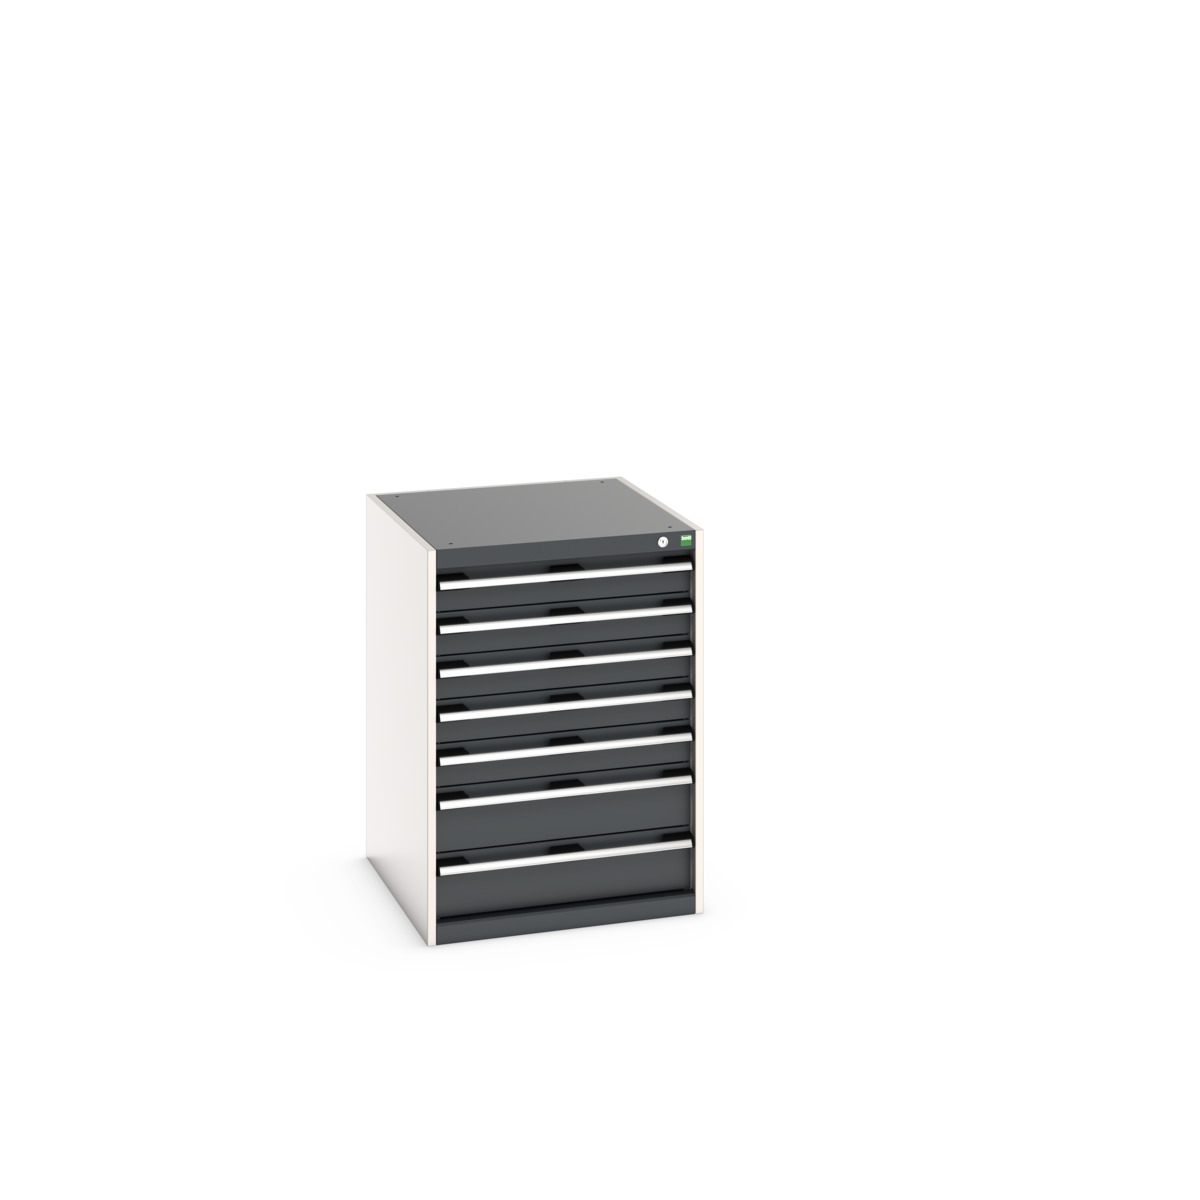 40027090. - cubio drawer cabinet 